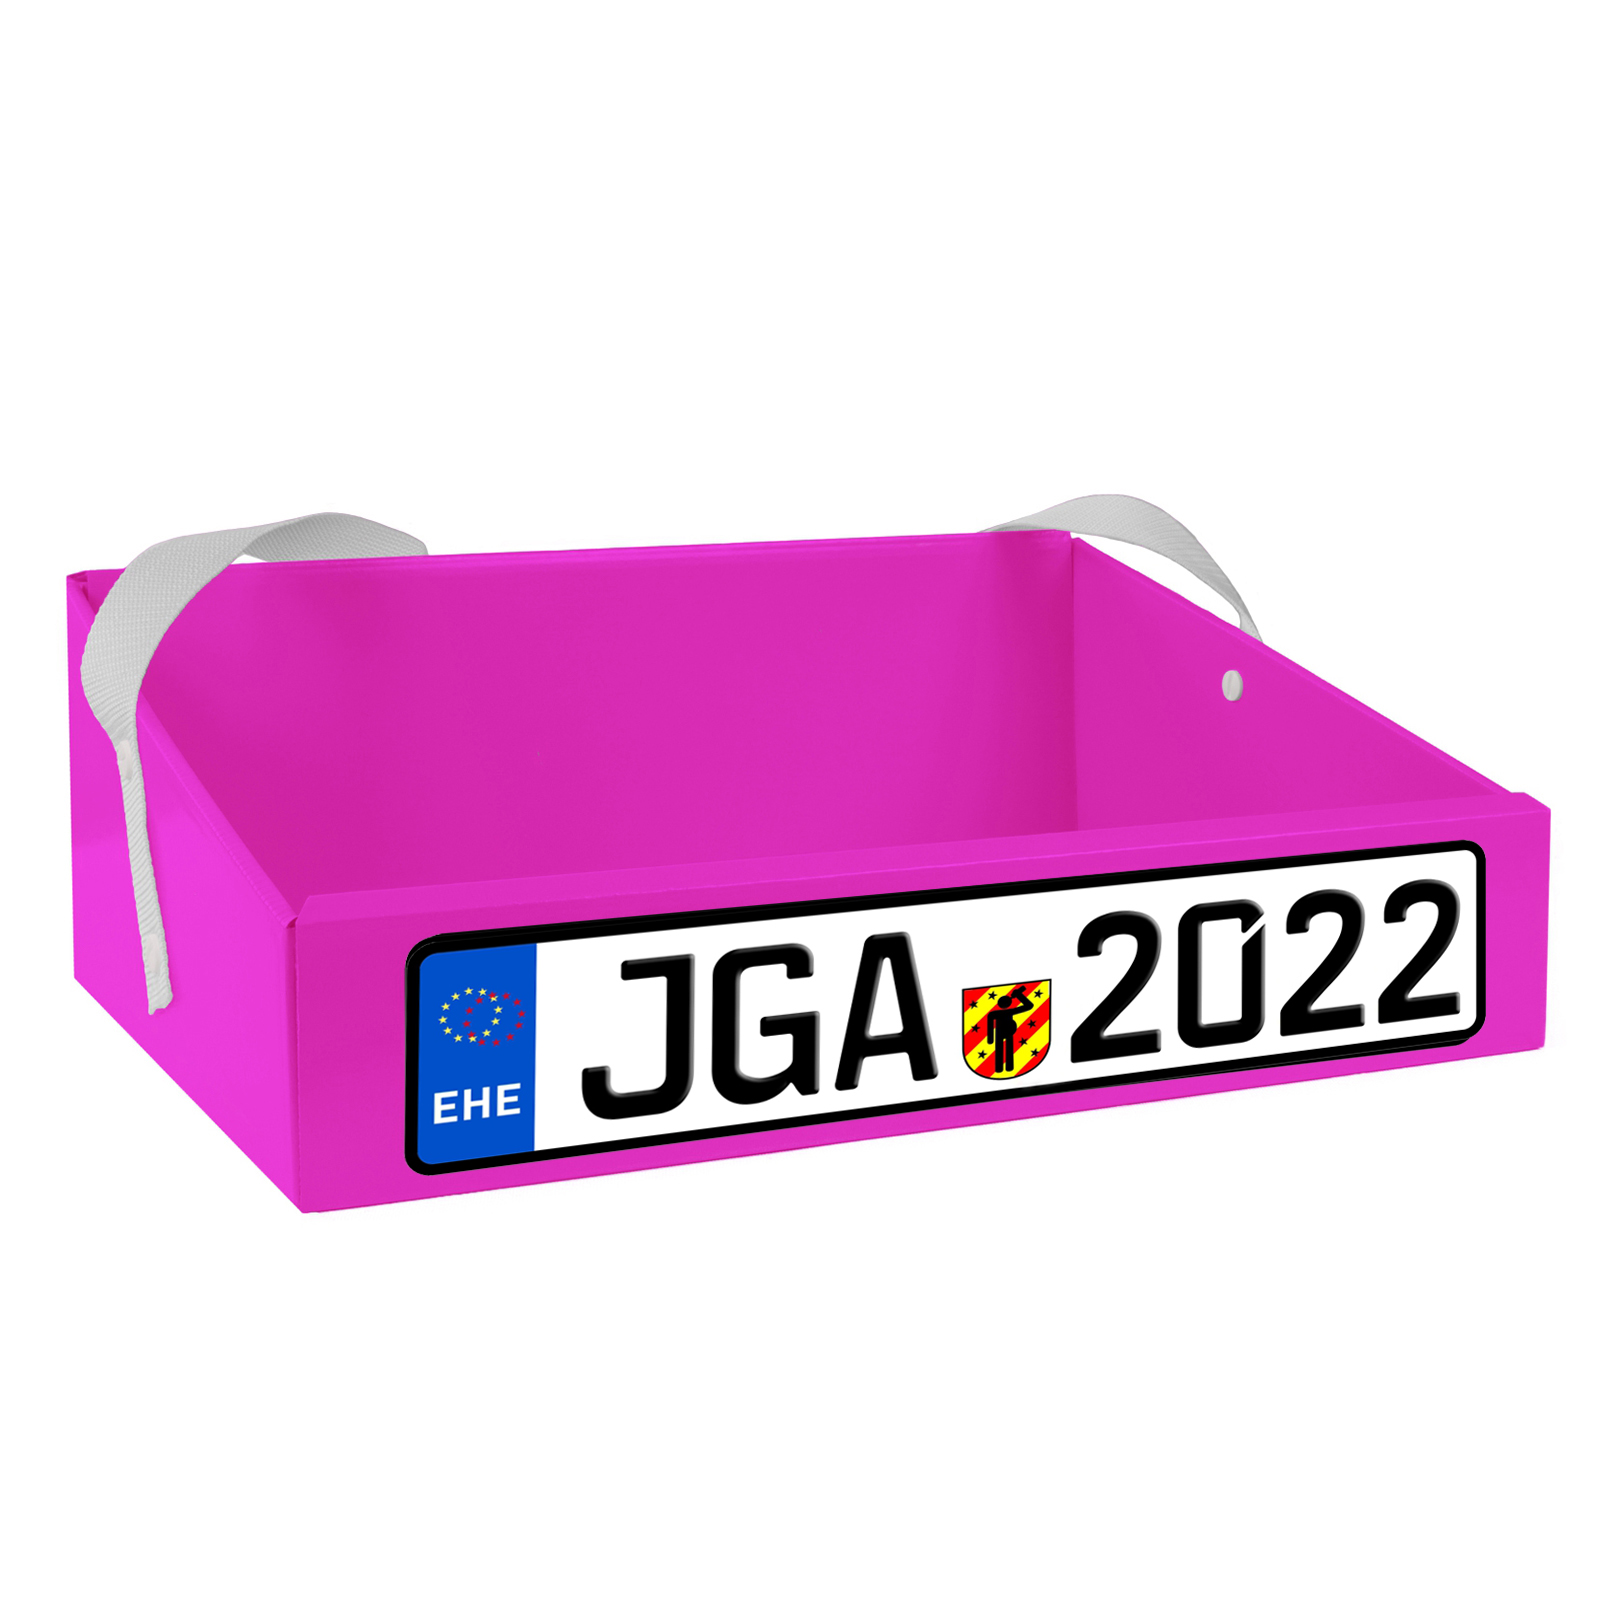 Bauchladen Kfz Jga 2022 pink